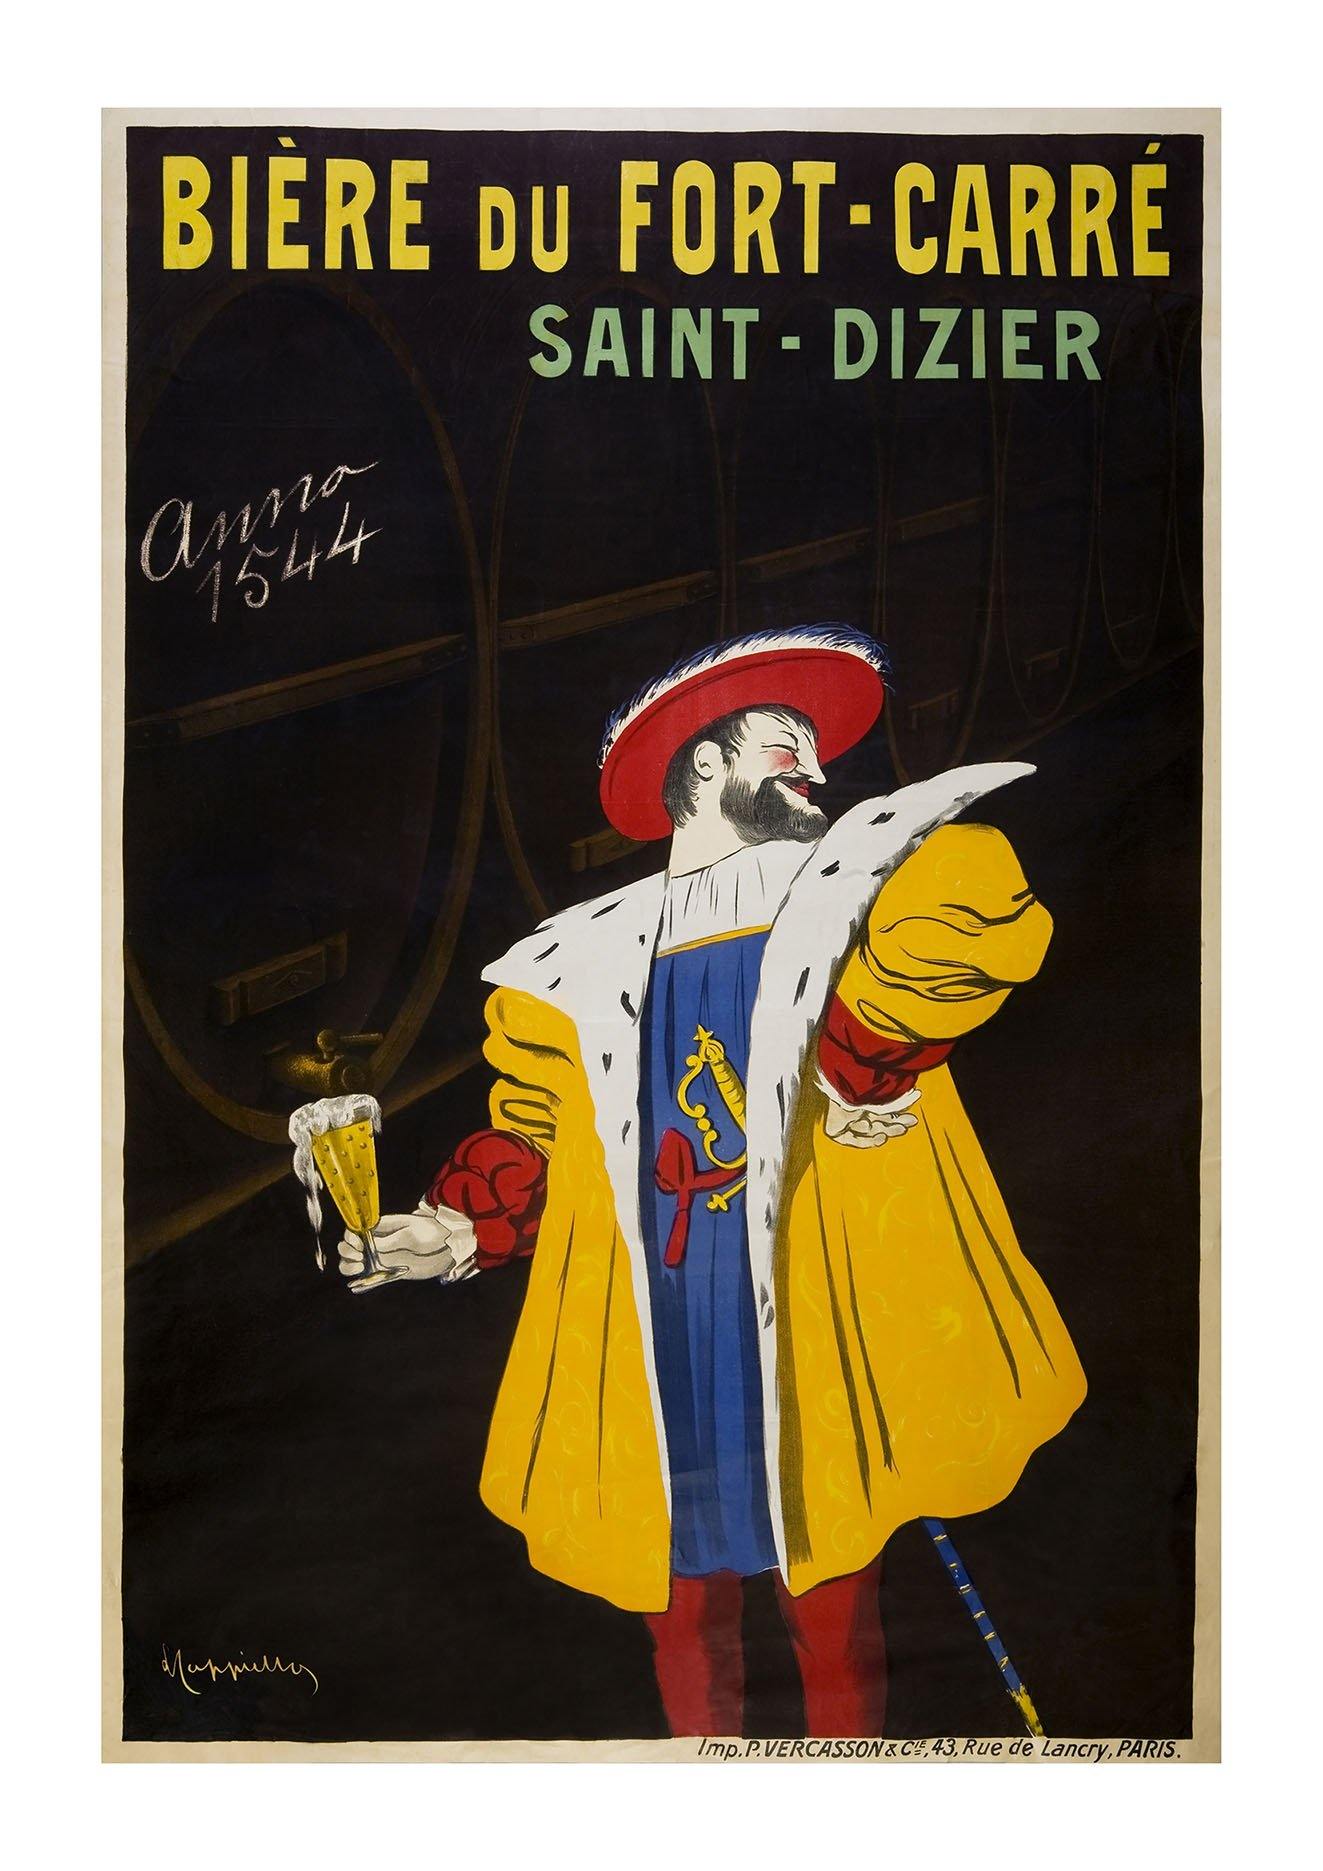 BIERE DU FORT POSTER: Vintage Advertising Art Print - Pimlico Prints